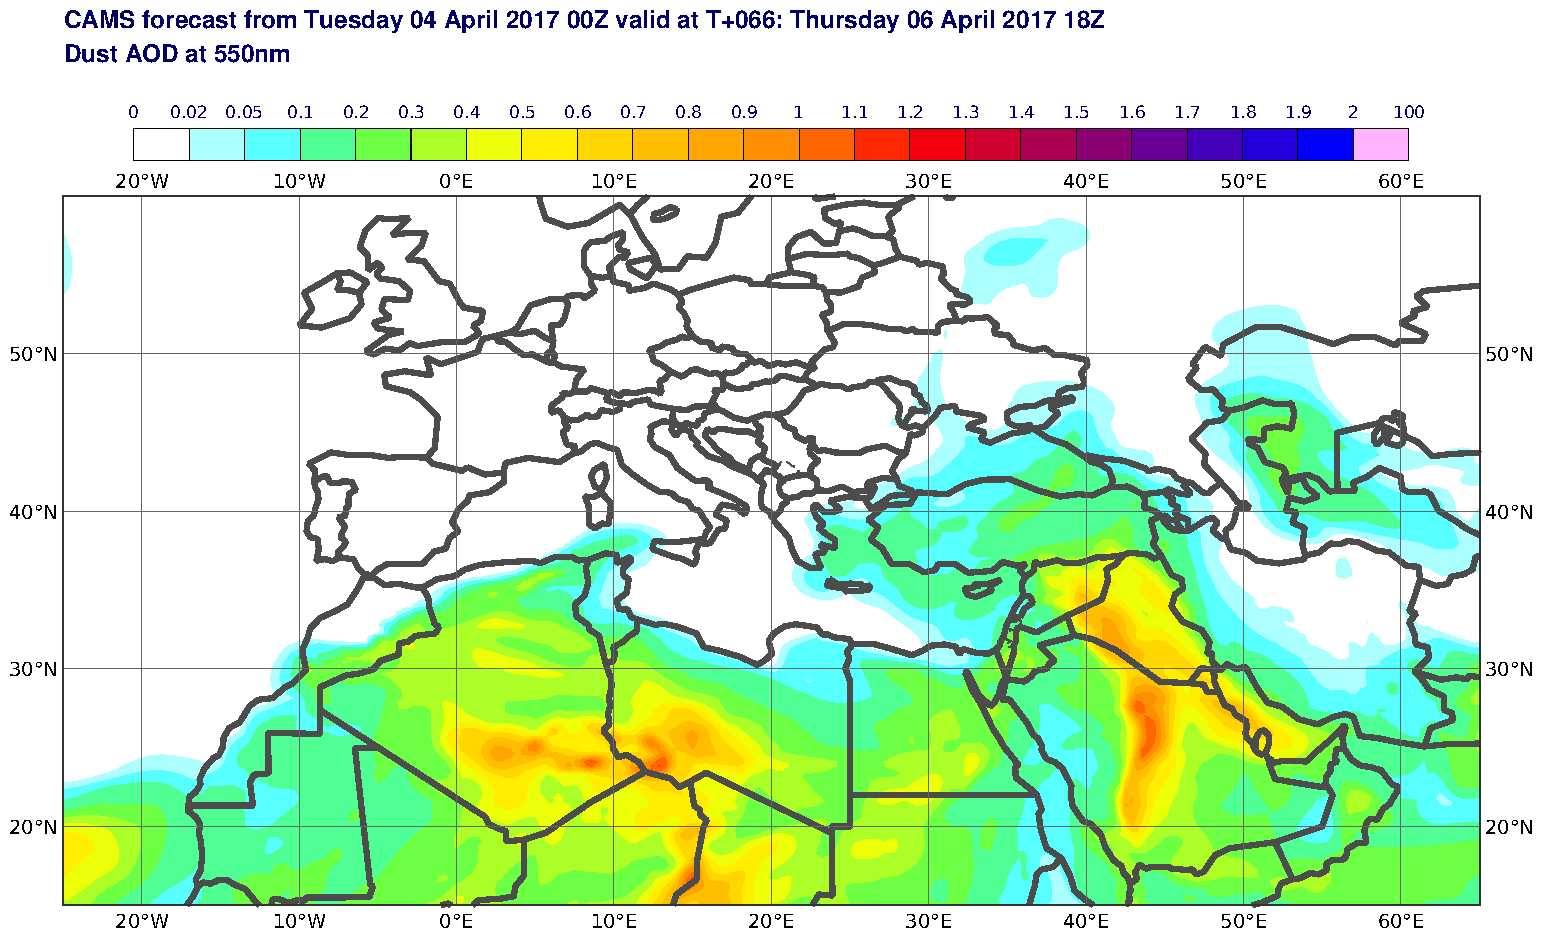 Dust AOD at 550nm valid at T66 - 2017-04-06 18:00